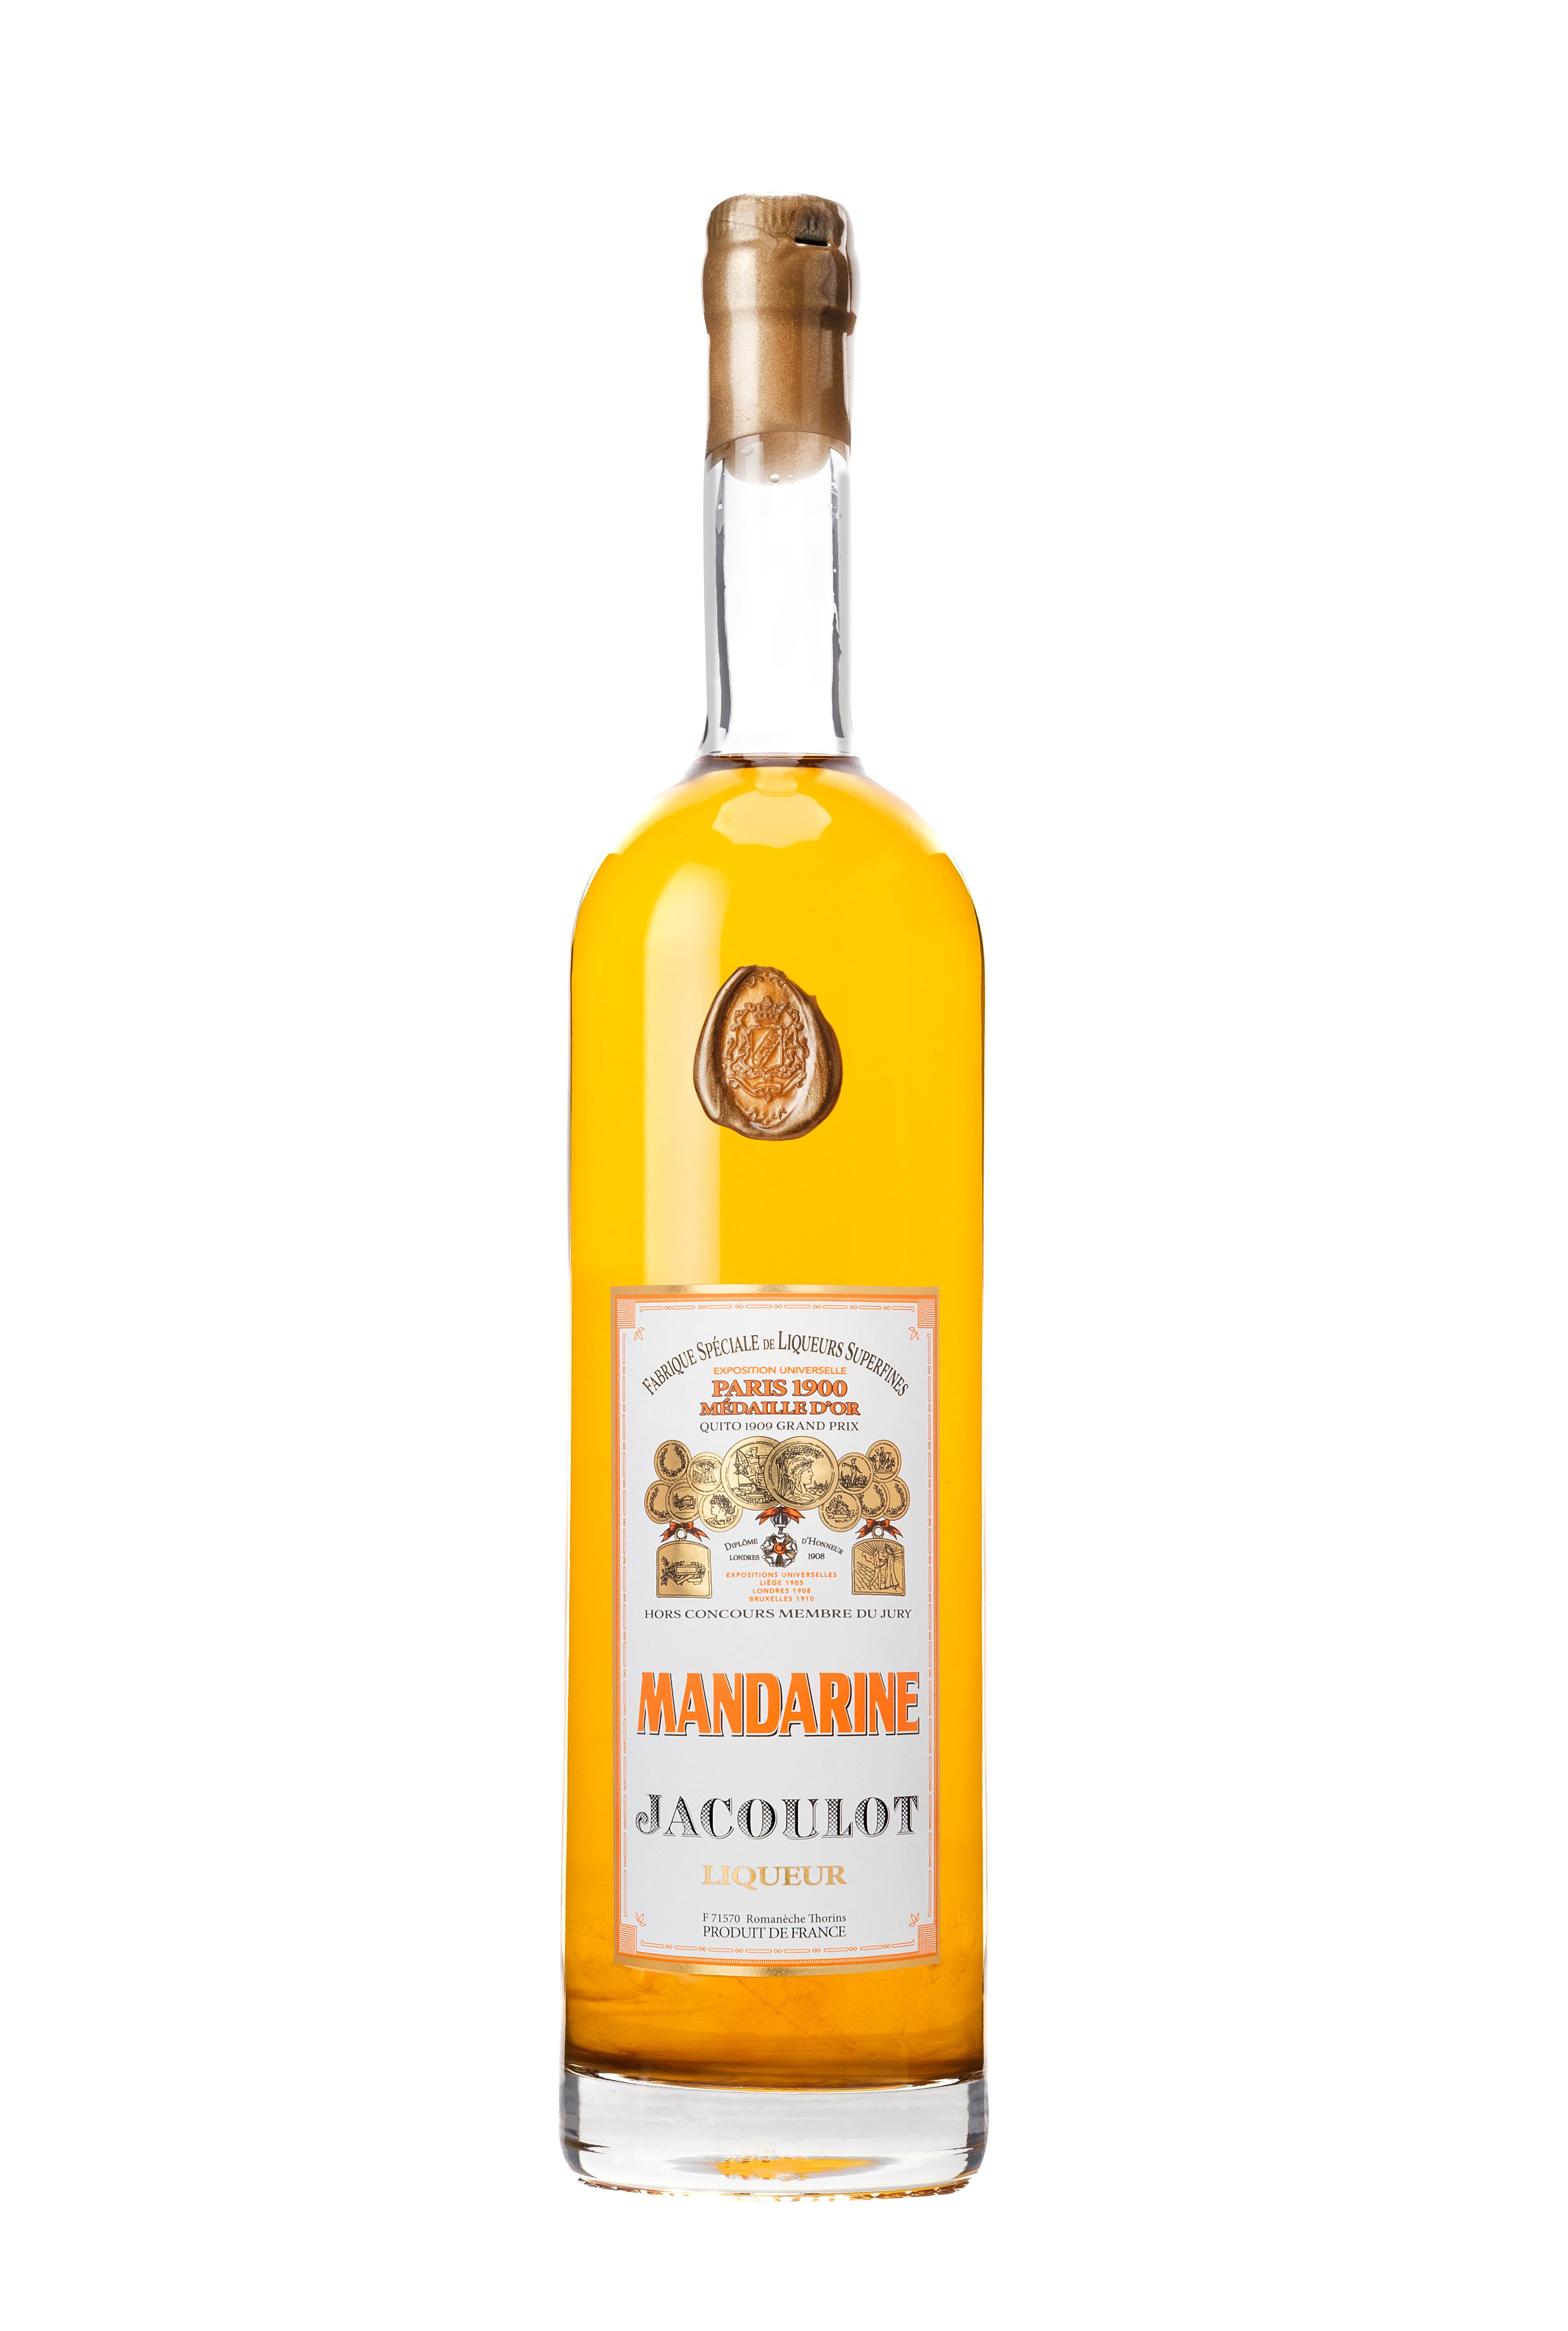 Jacoulot-liqueur-mandarine-magnum-150cl (1)